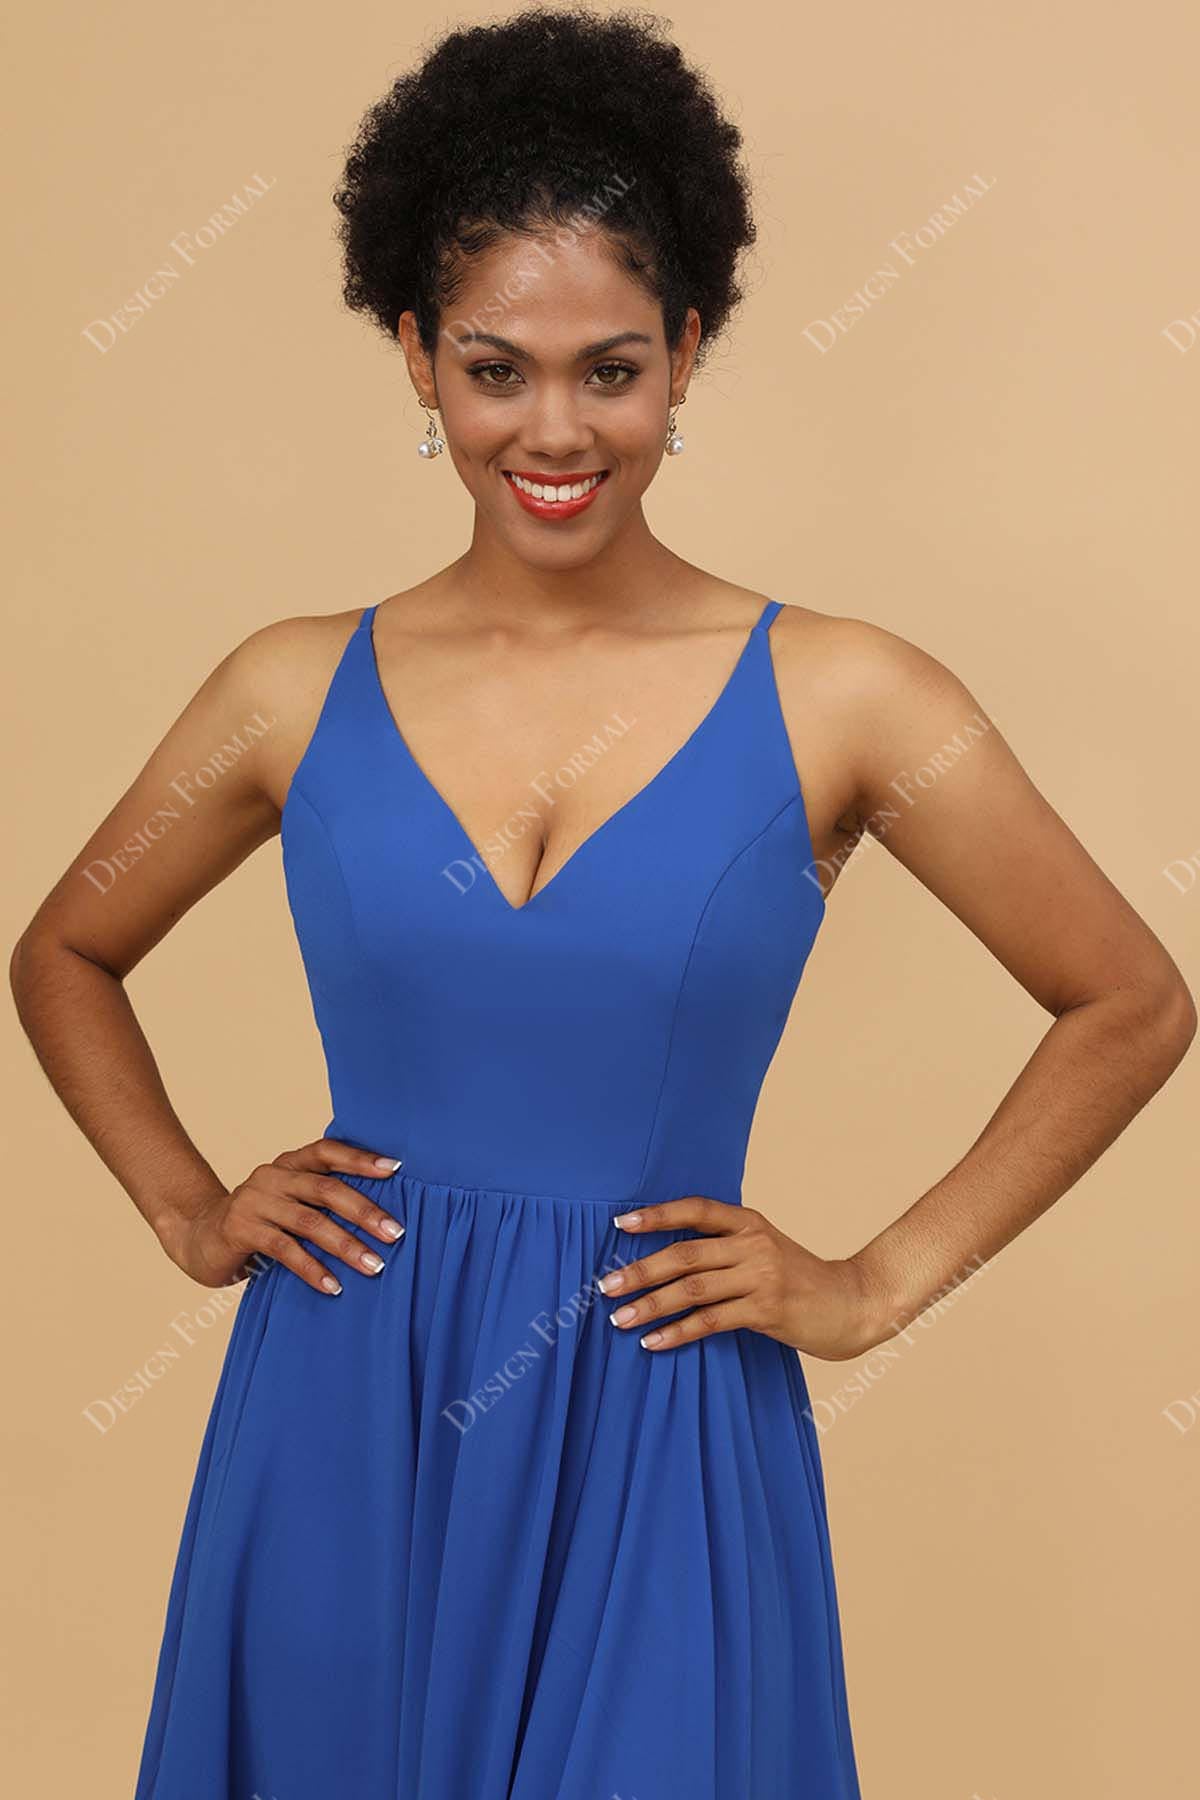 V-neck ocean blue bridesmaid gown